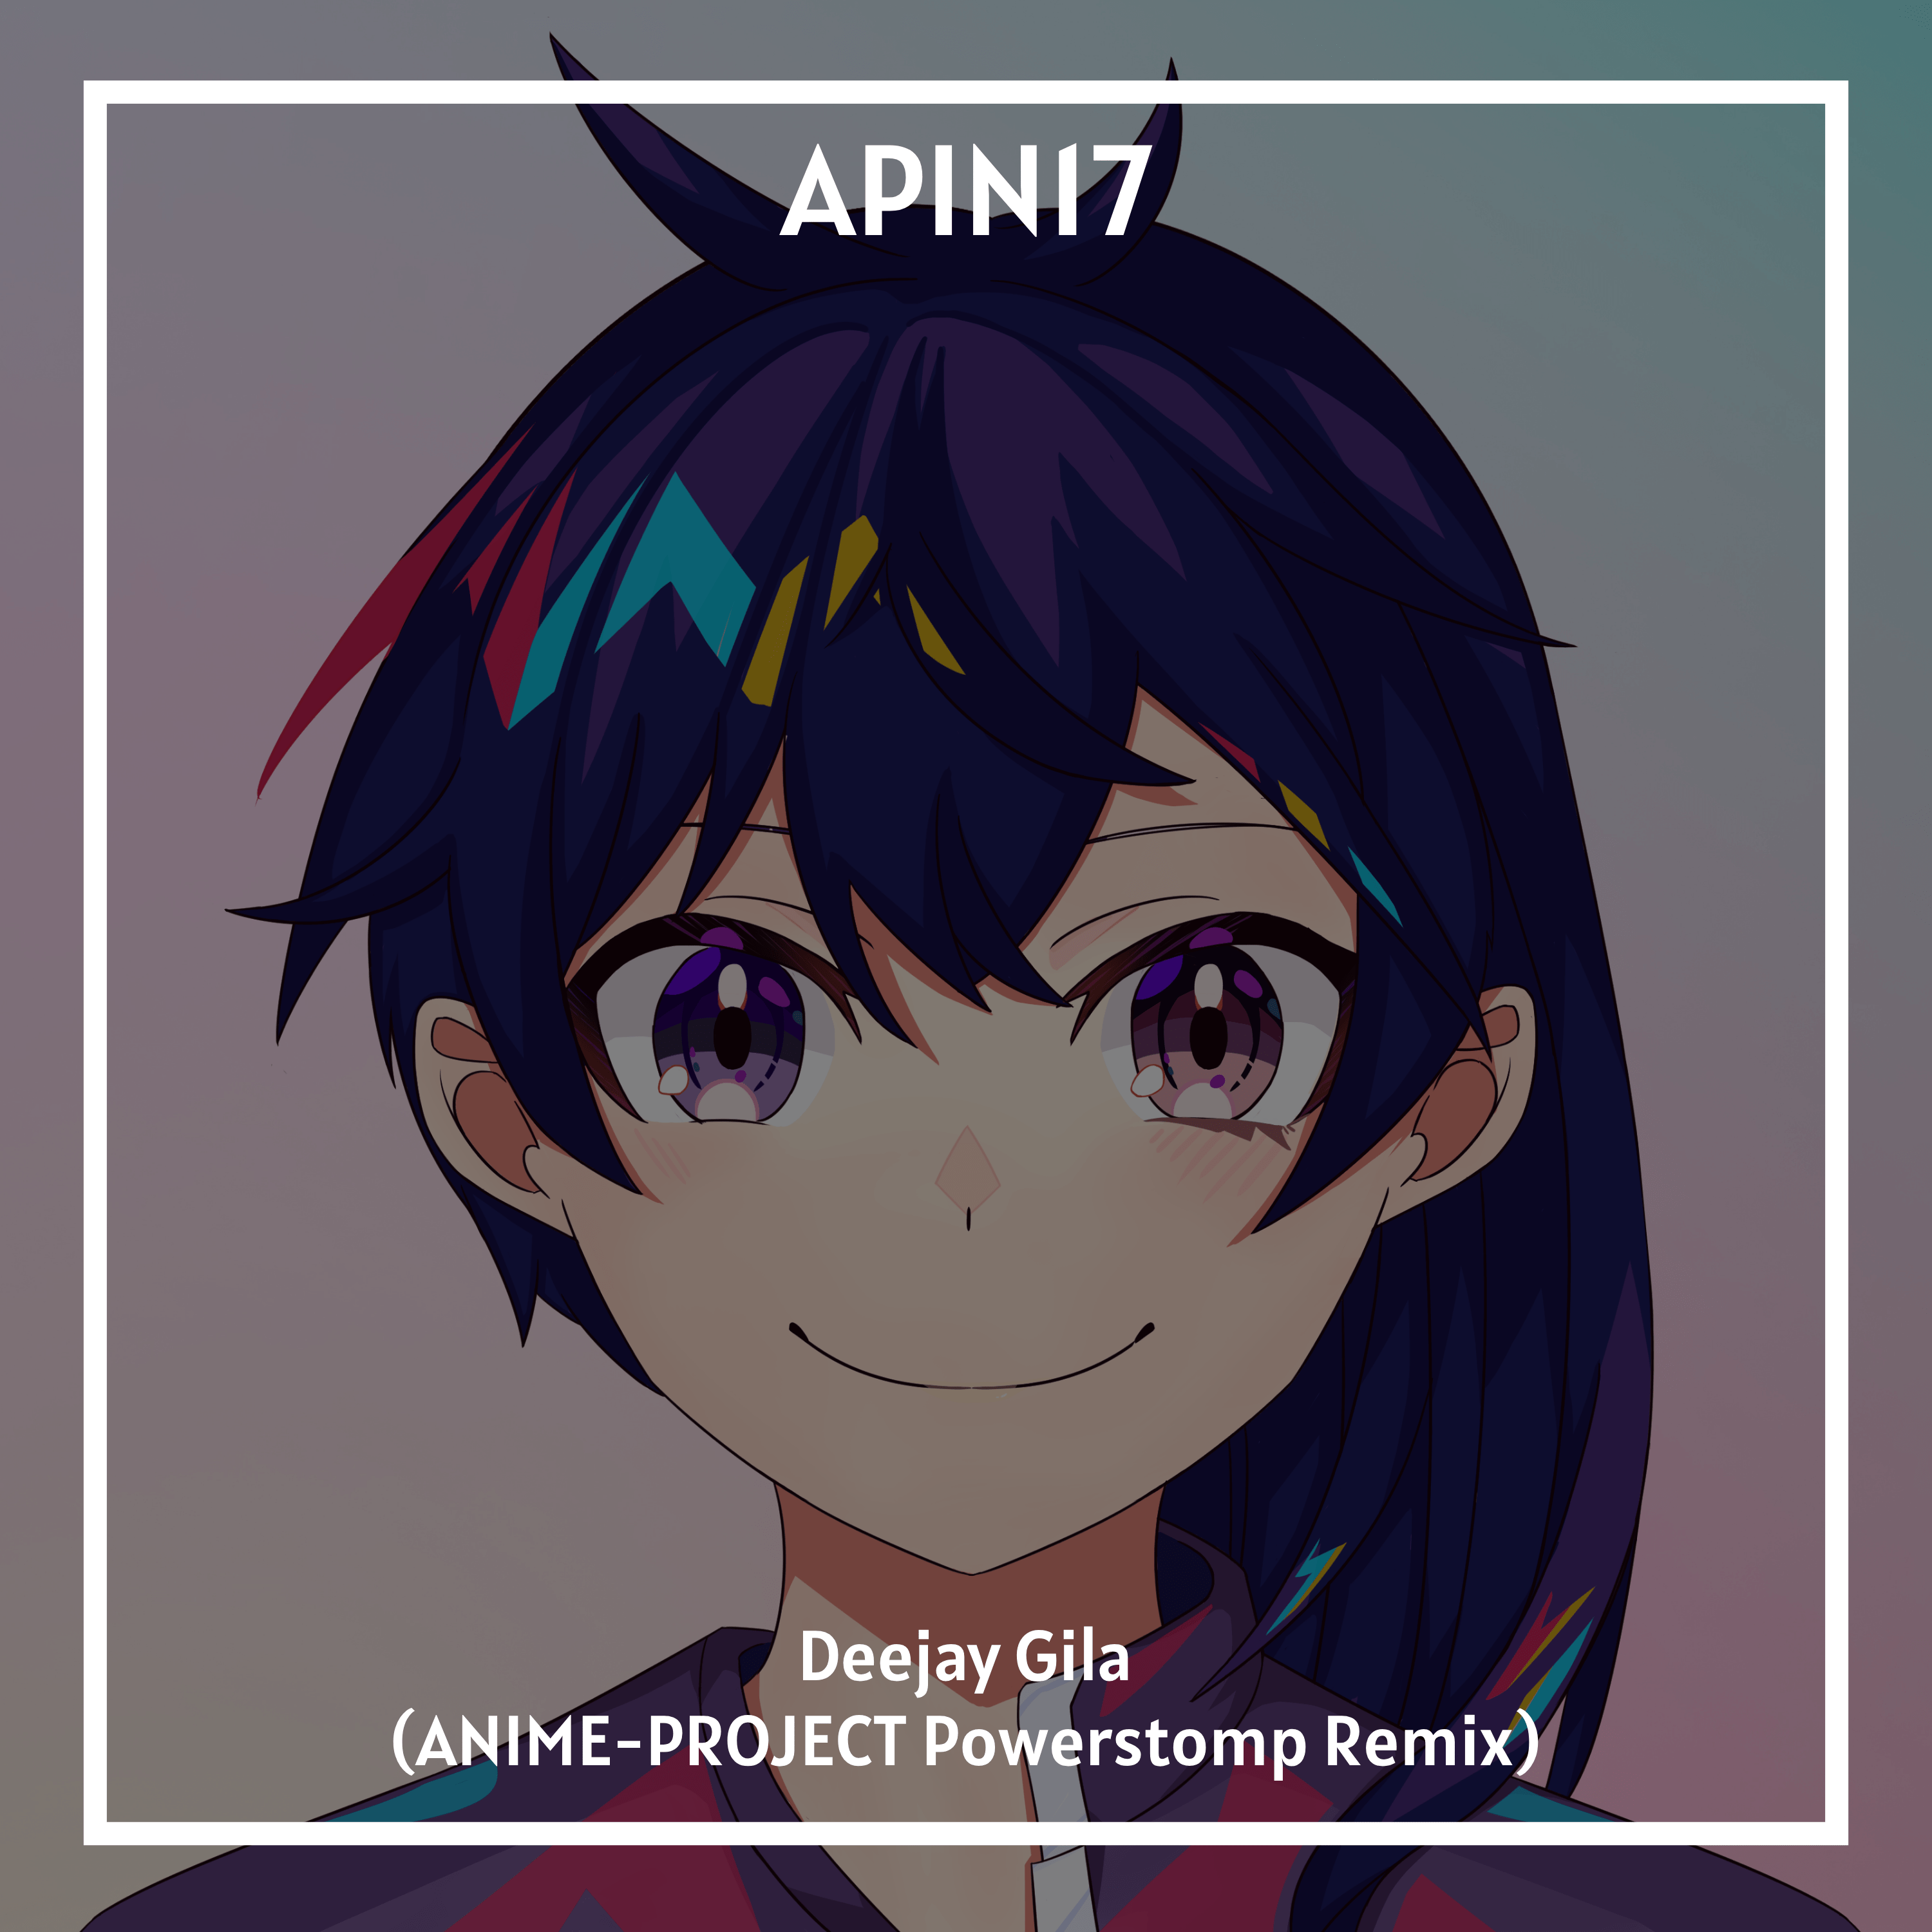 Apin17 - Deejay Gila (ANIME-PROJECT Powerstomp Remix)